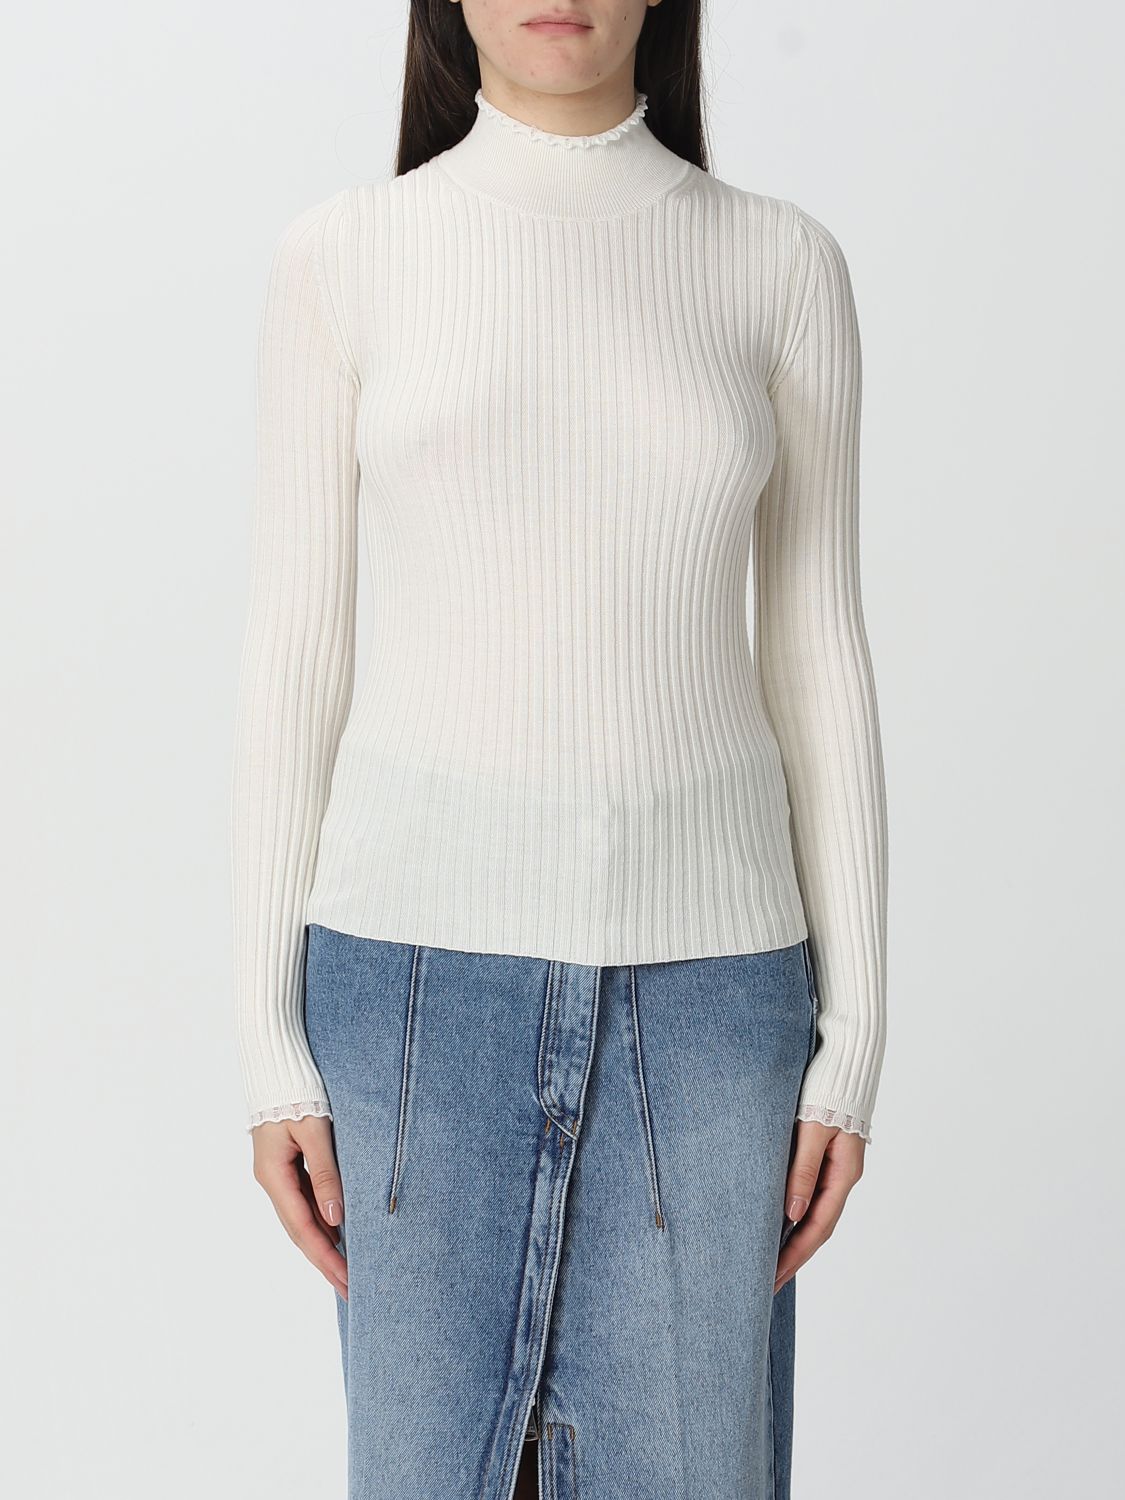 Chloé Wool Sweater In White